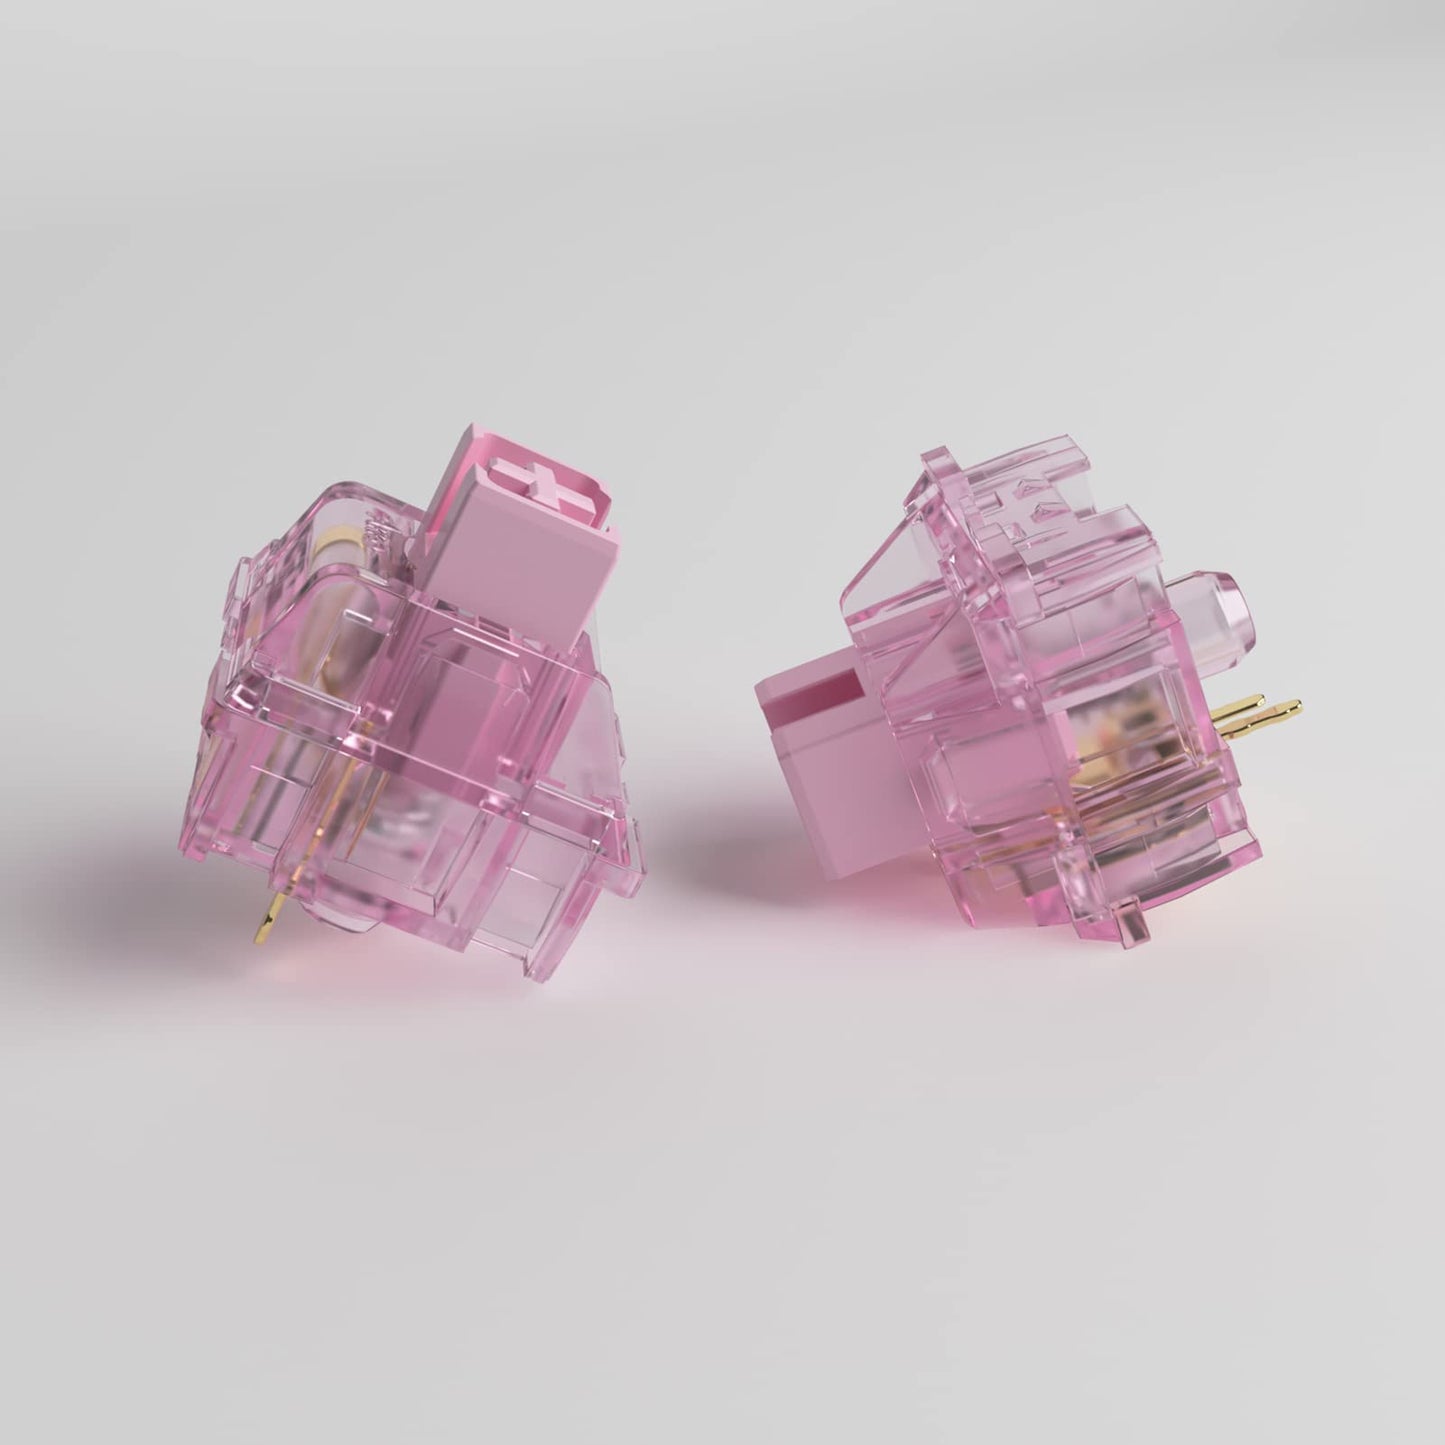 Akko CS Jelly Pink Switches 3 Pin 45gf خطي مفتاح مقاوم للغبار متوافق مع لوحة المفاتيح الميكانيكية MX (45 قطعة) 